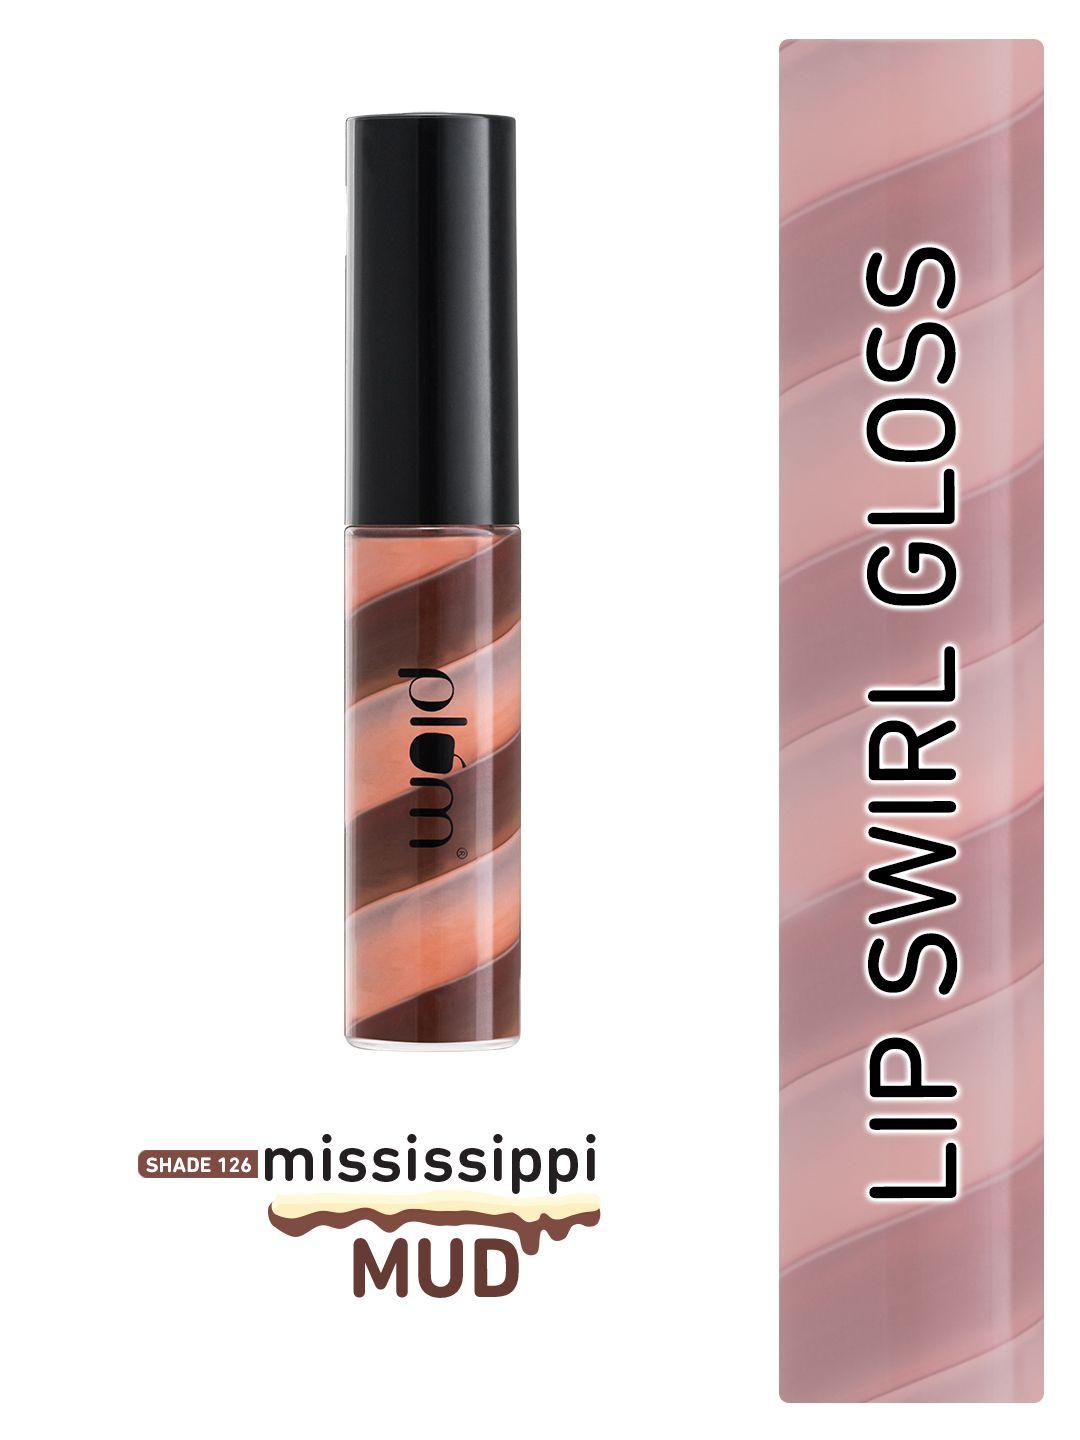 plum swirl high shine finish lip gloss - 6ml - mississippi mud 126